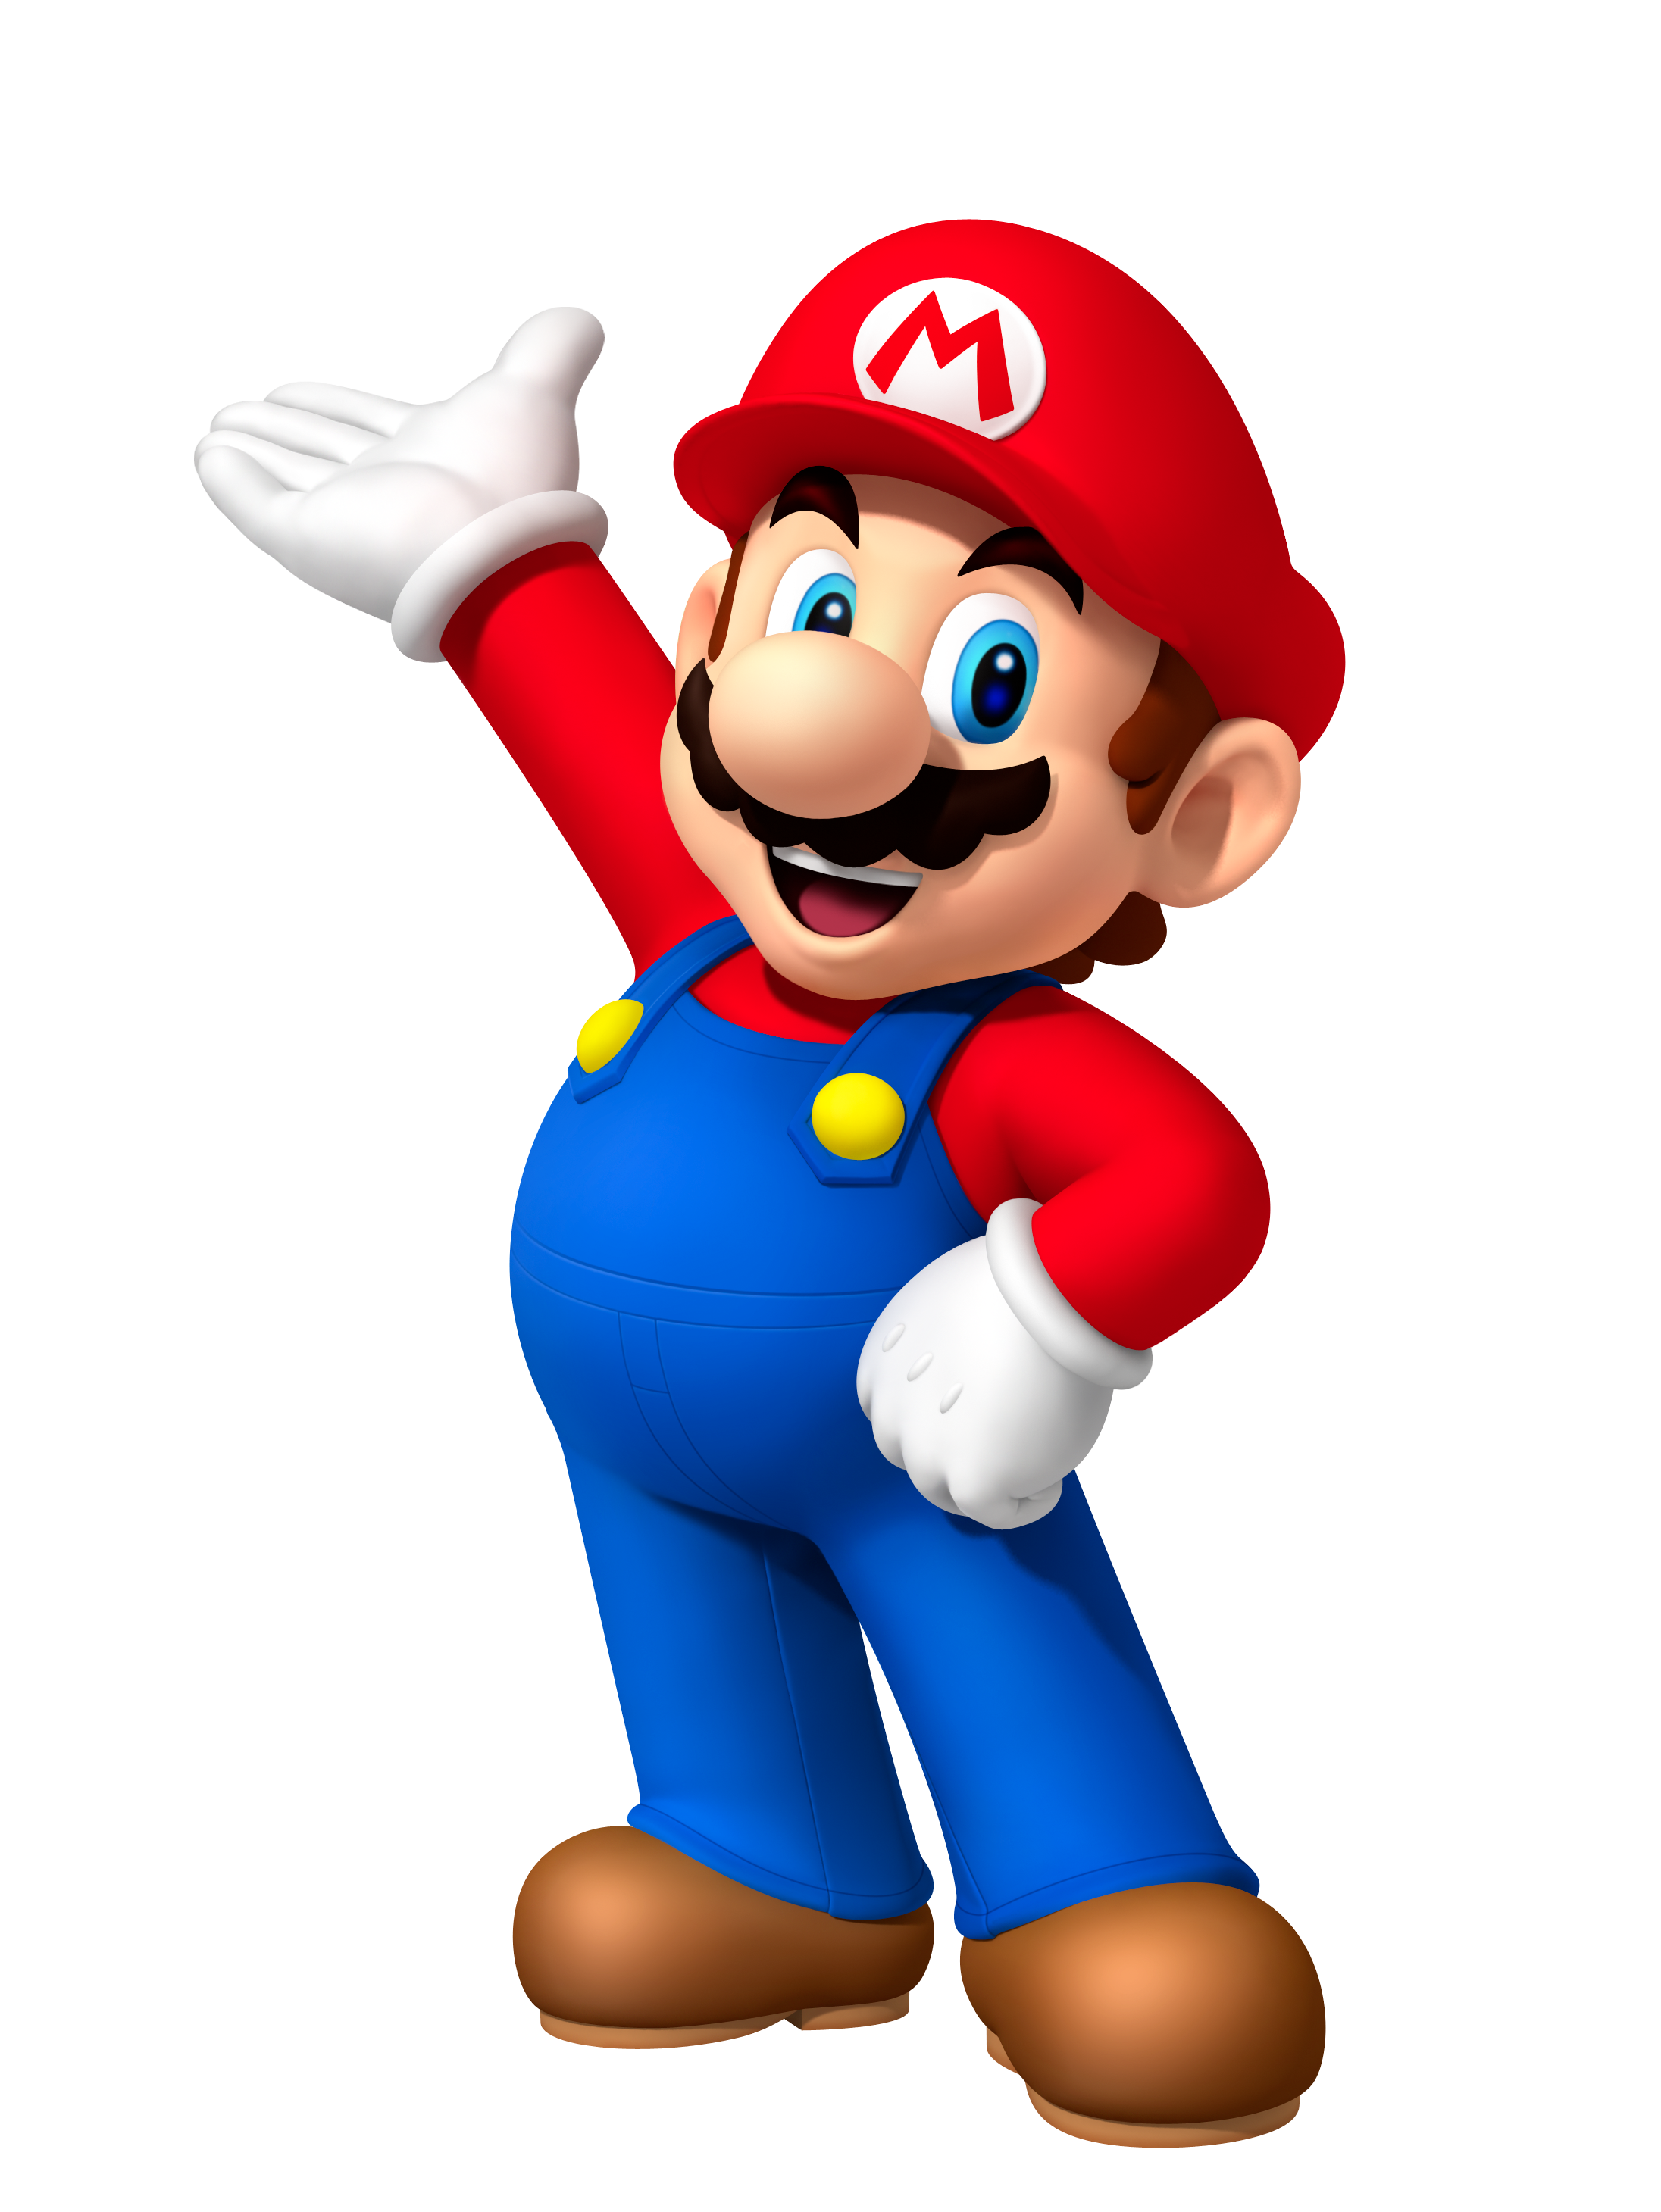 Super Mario PNG Image.